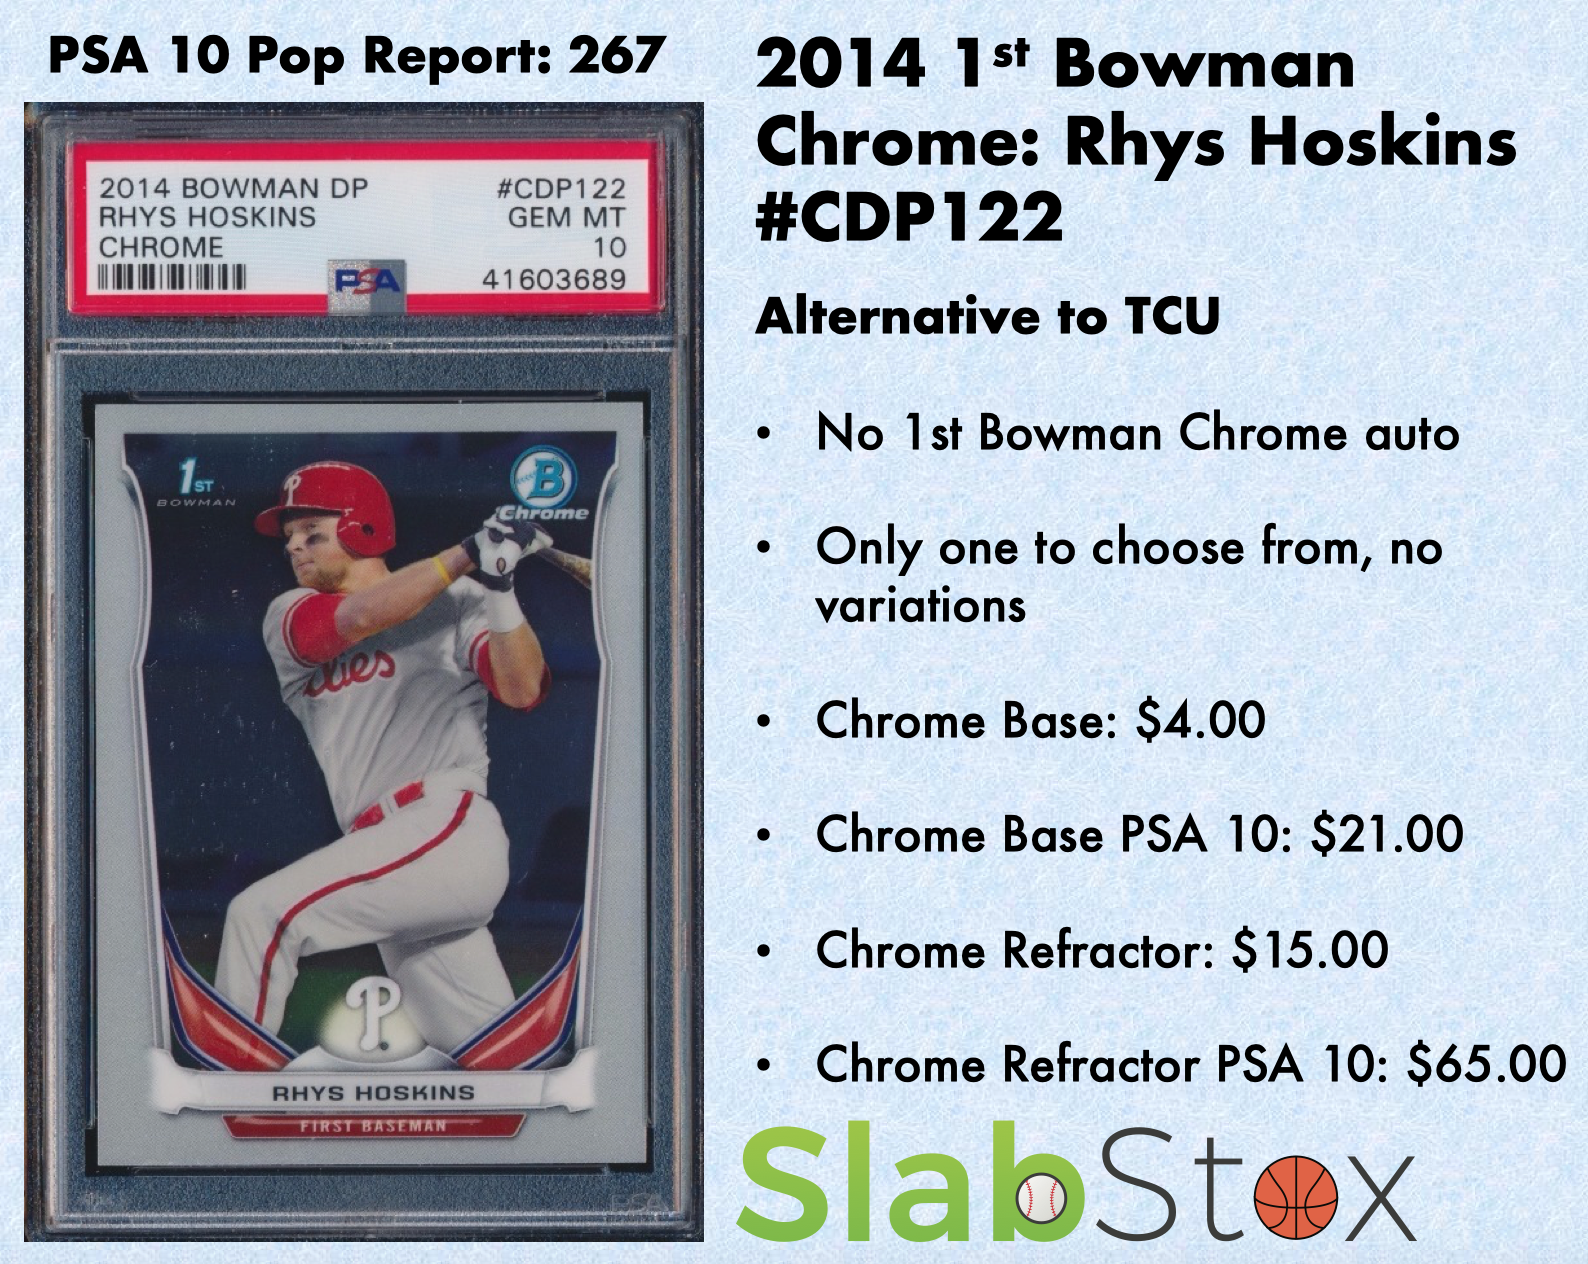 2014 1st Bowman Chrome Rhys Hoskins sports card and stats